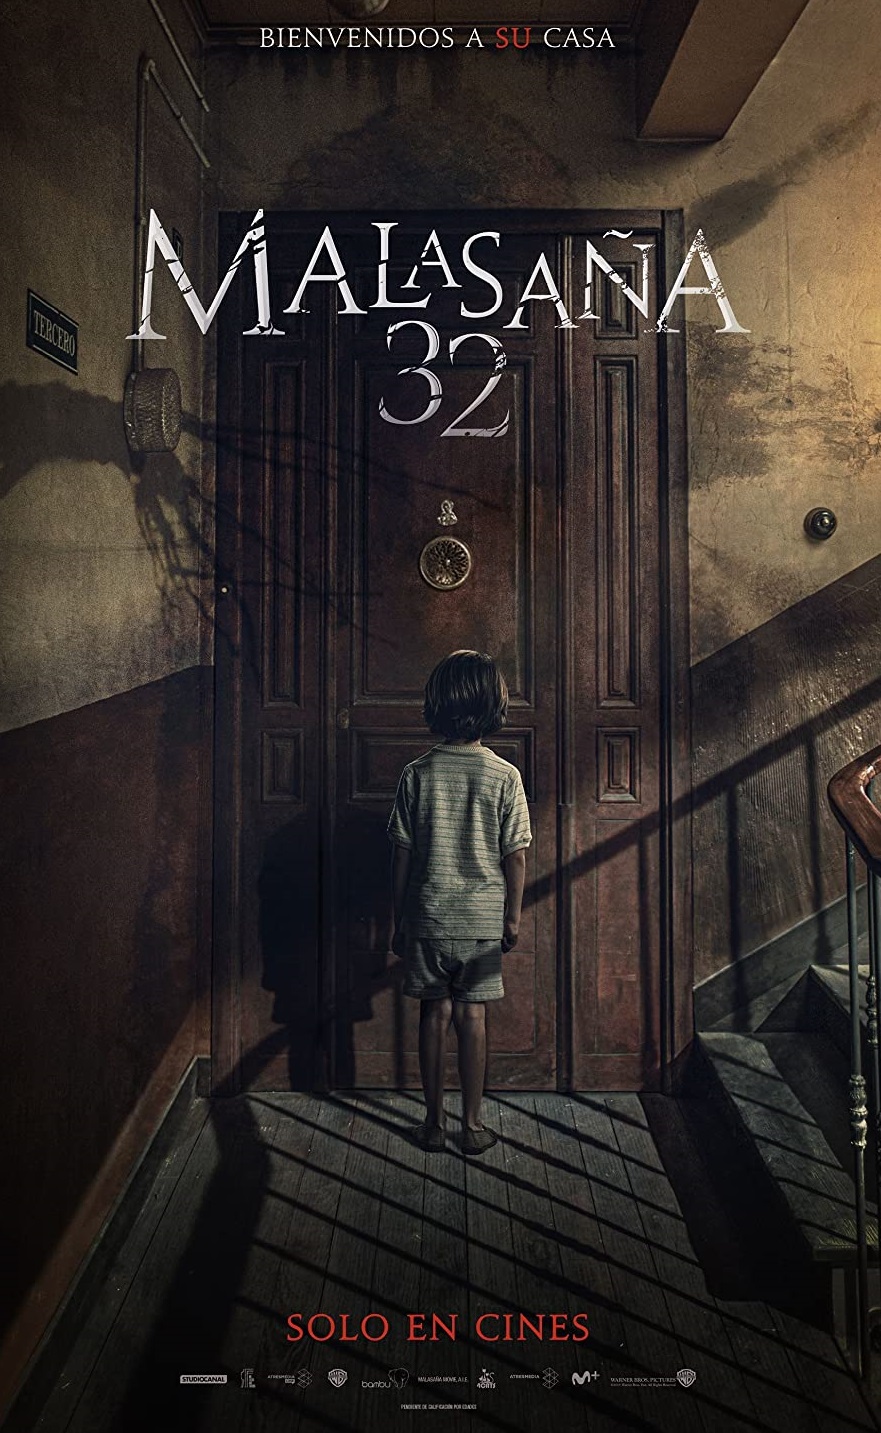 32 Malasana Street 2020 Tamil Dubbed Horror Movie Online